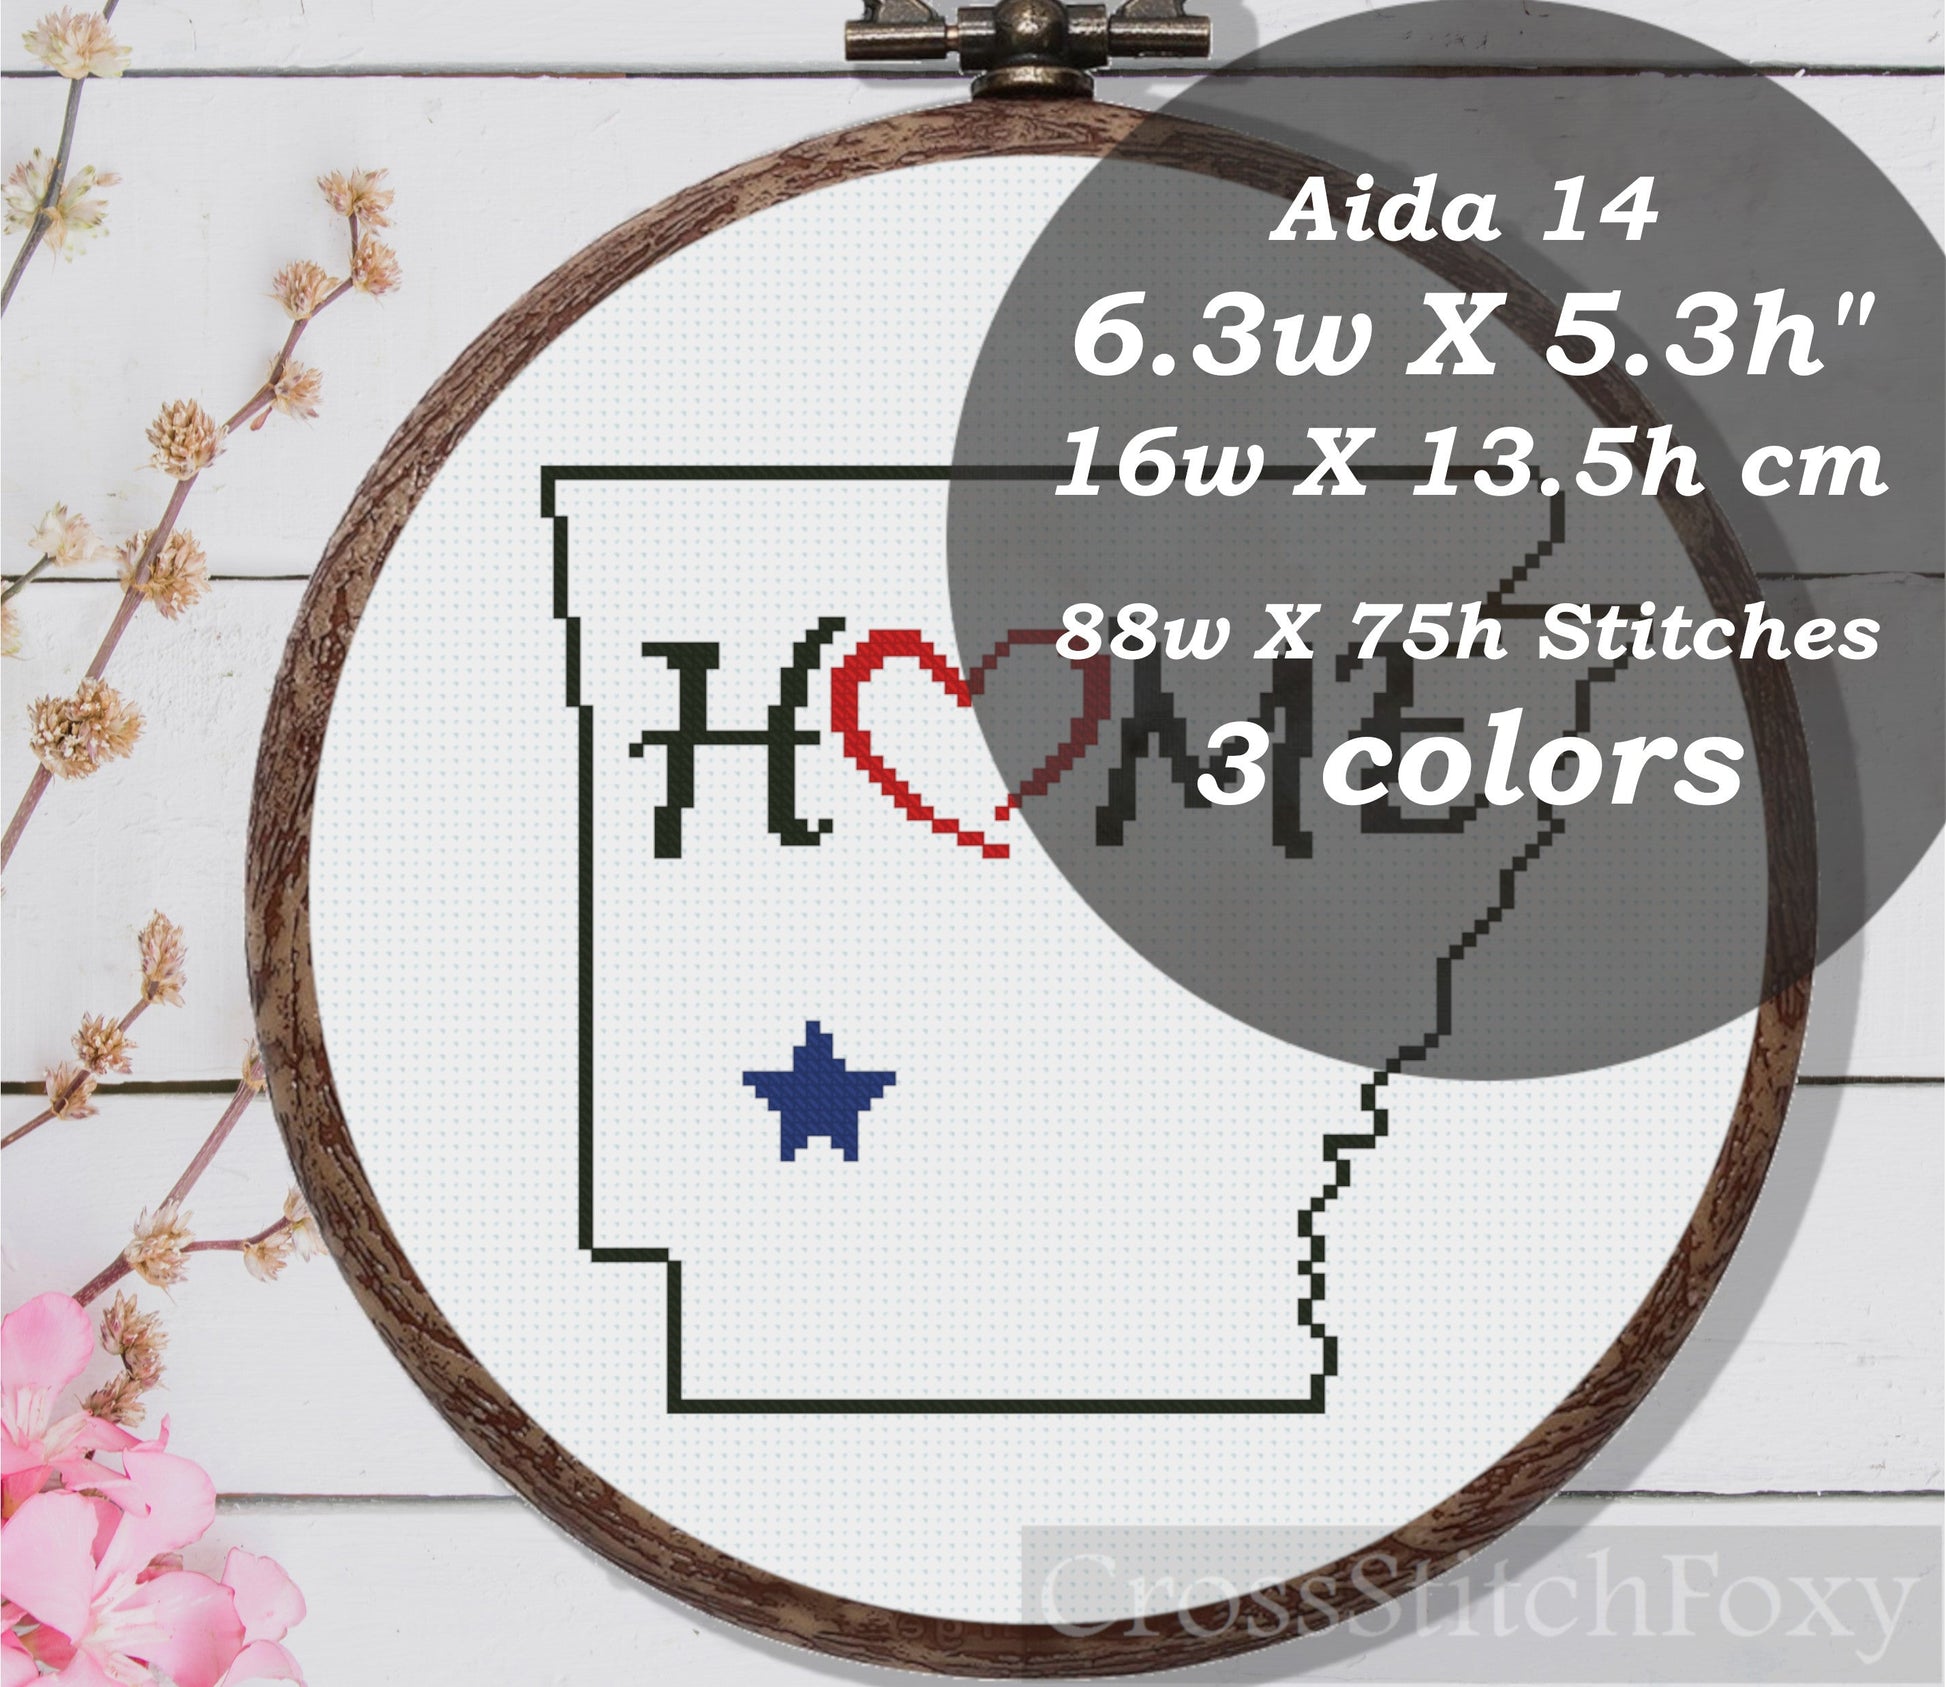 Arkansas Home Sign US State Cross Stitch Pattern